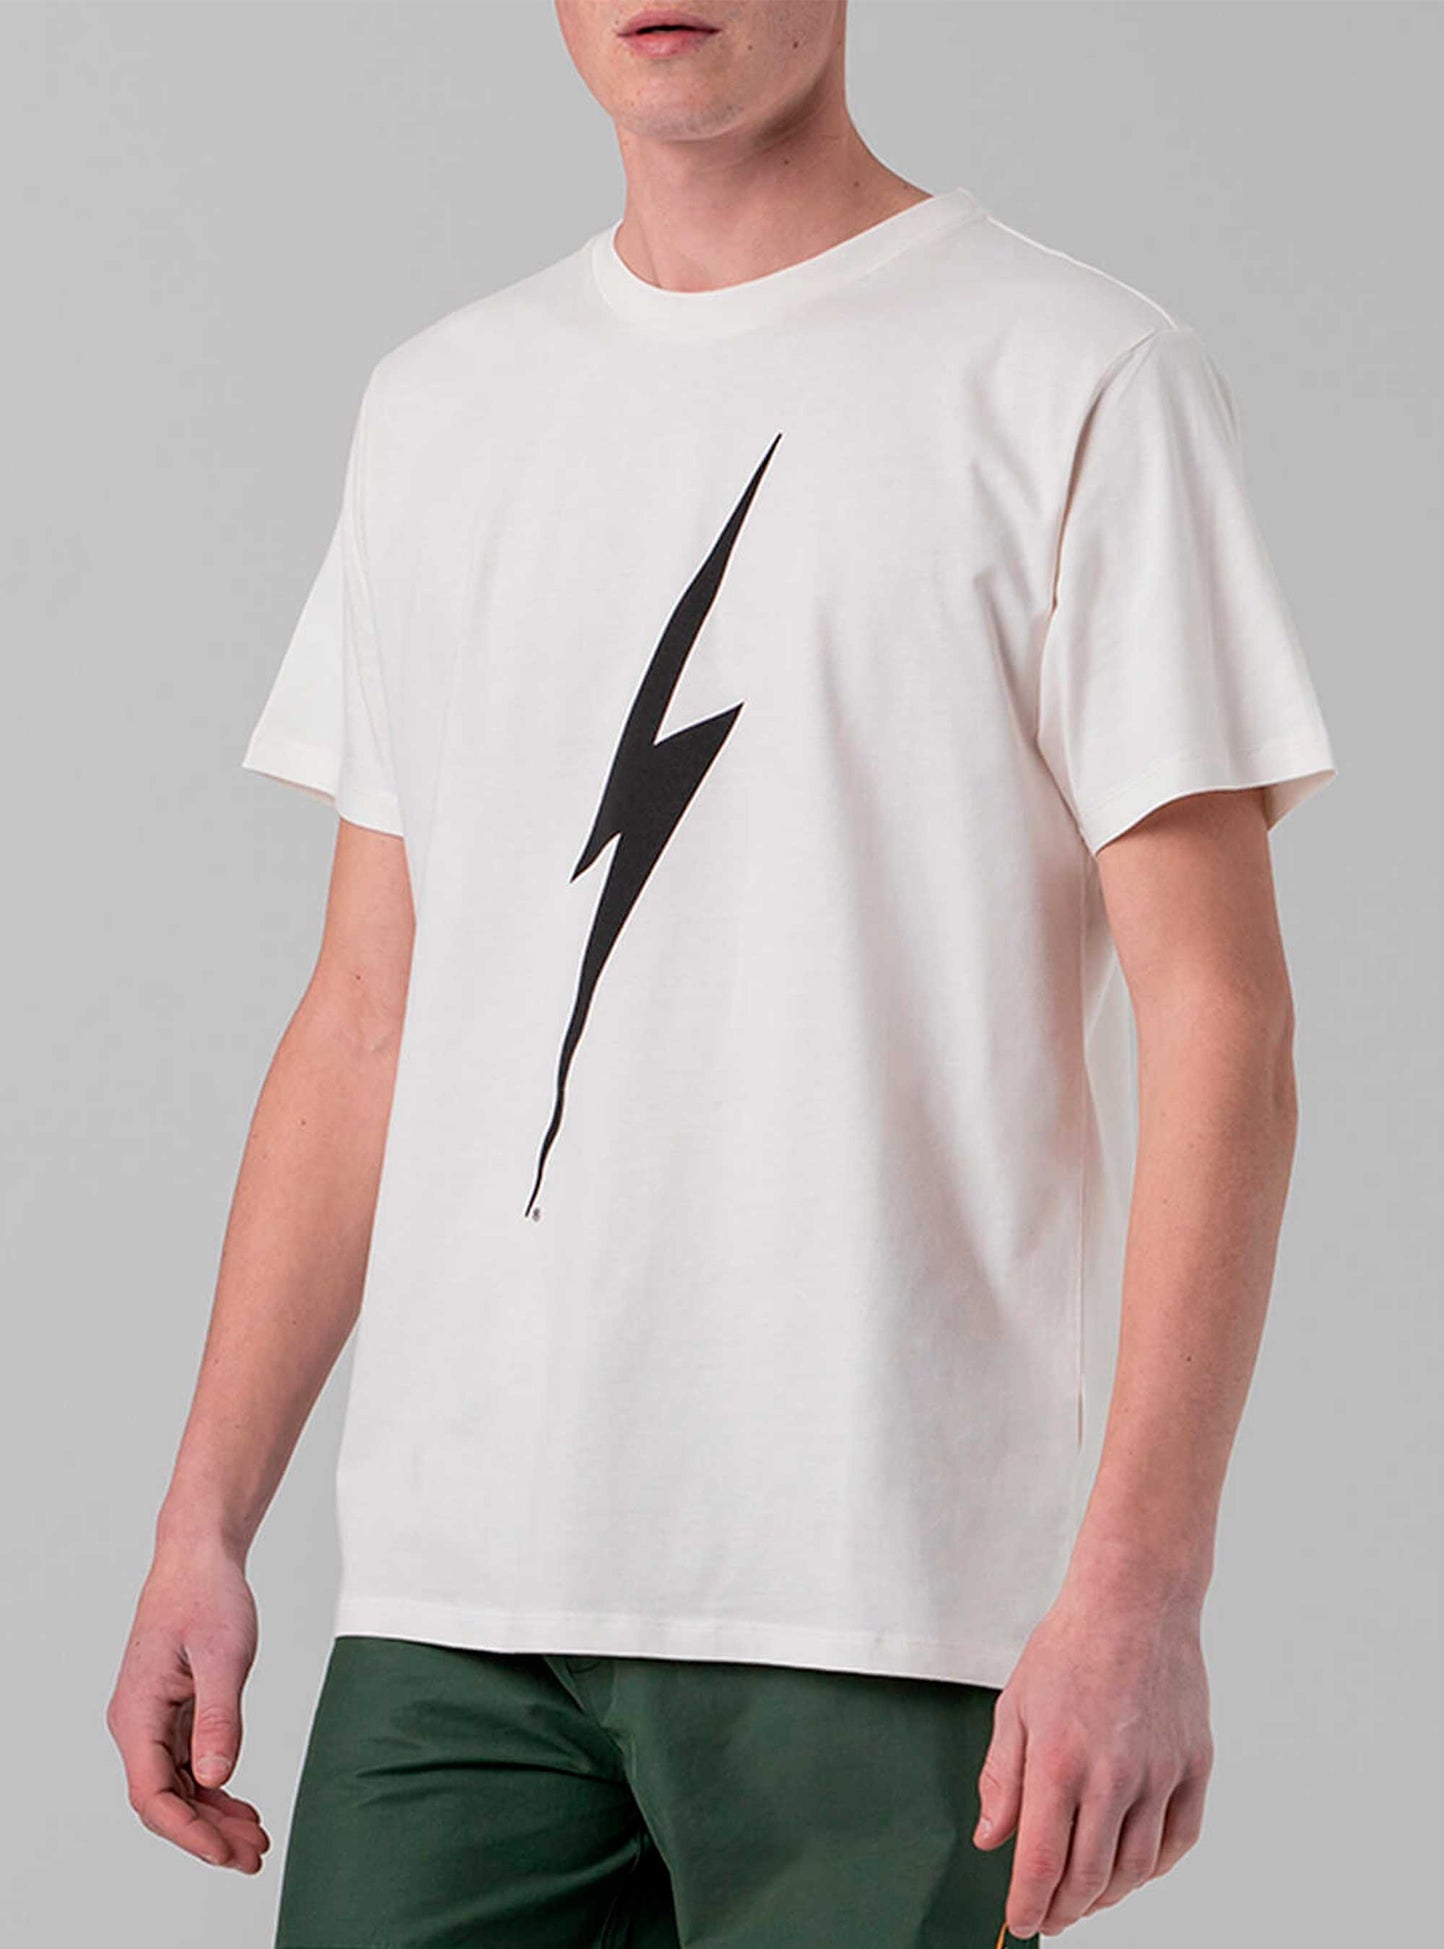 Camiseta De Manga Corta Lightning Bolt Forever Eco Tee - Confort Y Calidad Portuguesa  MKP